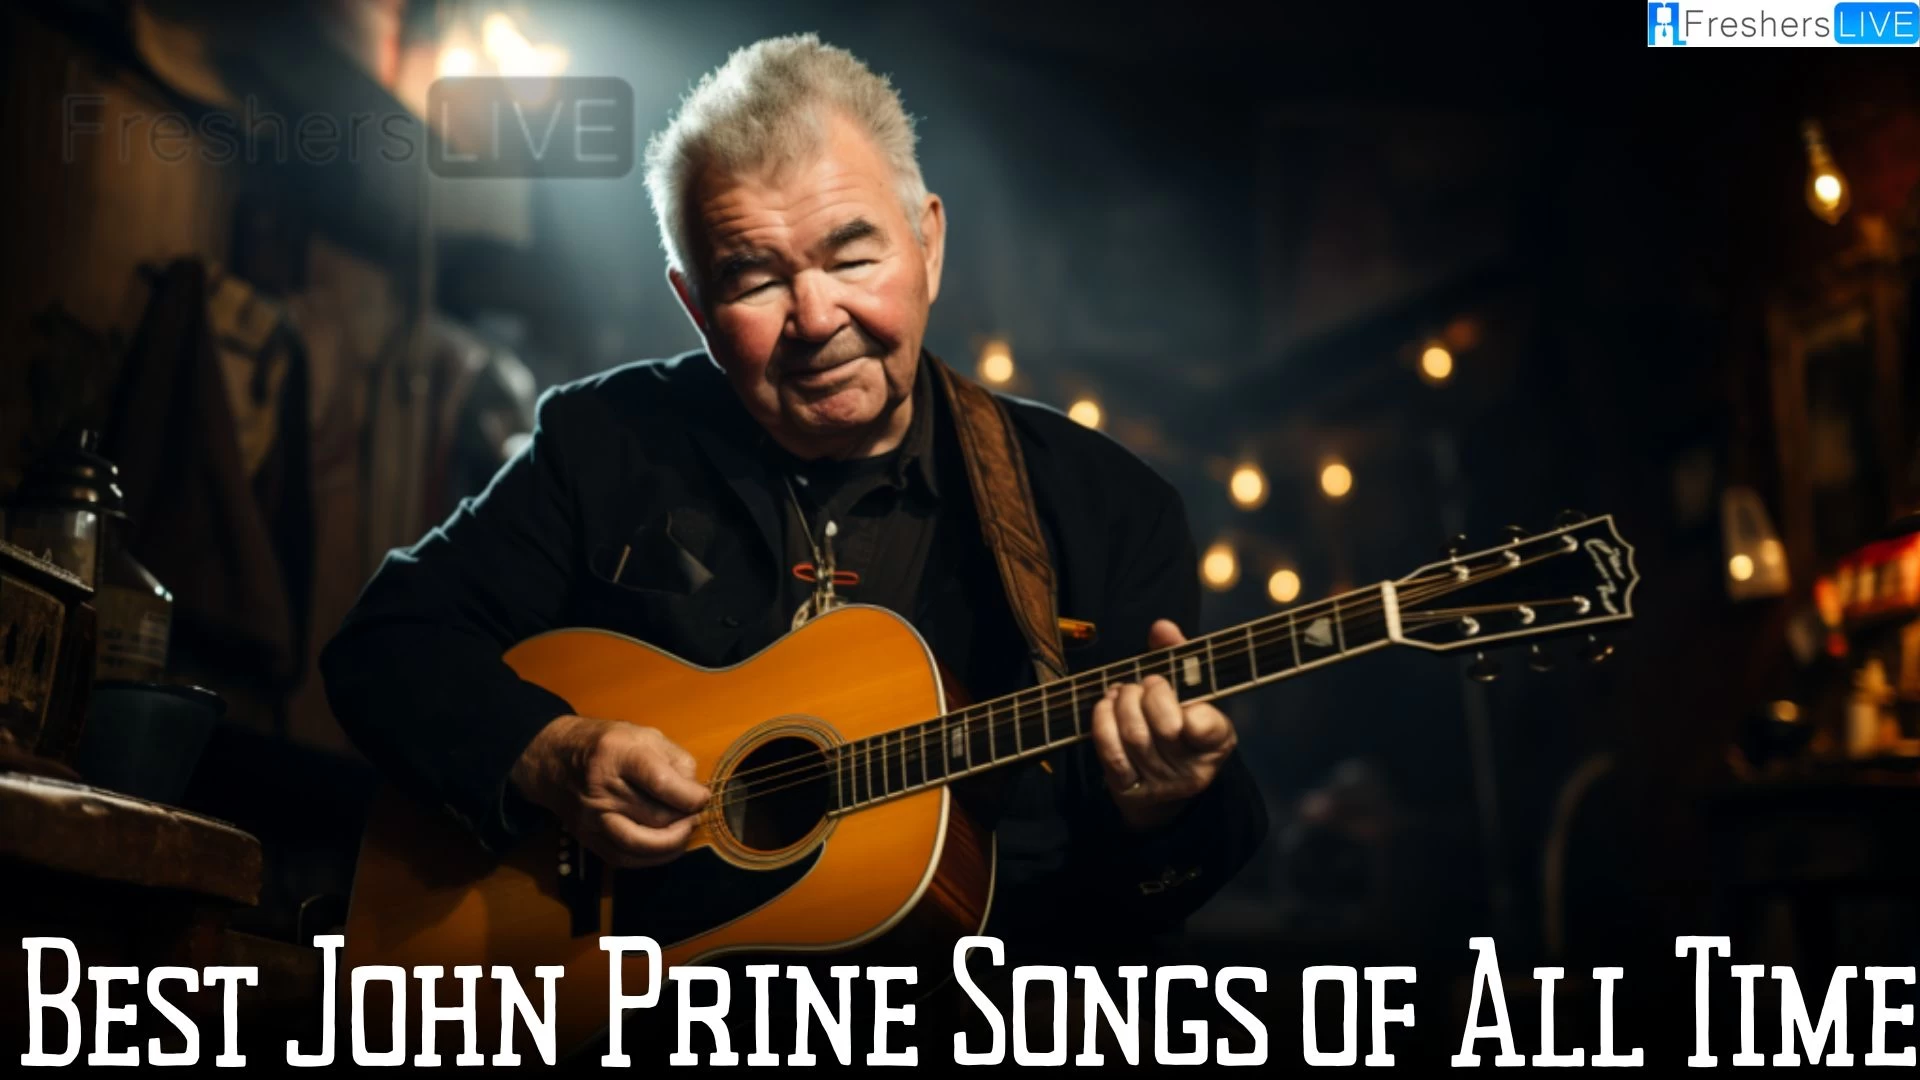 Best John Prine Songs of All Time - Top 10 Timeless Musical Journey